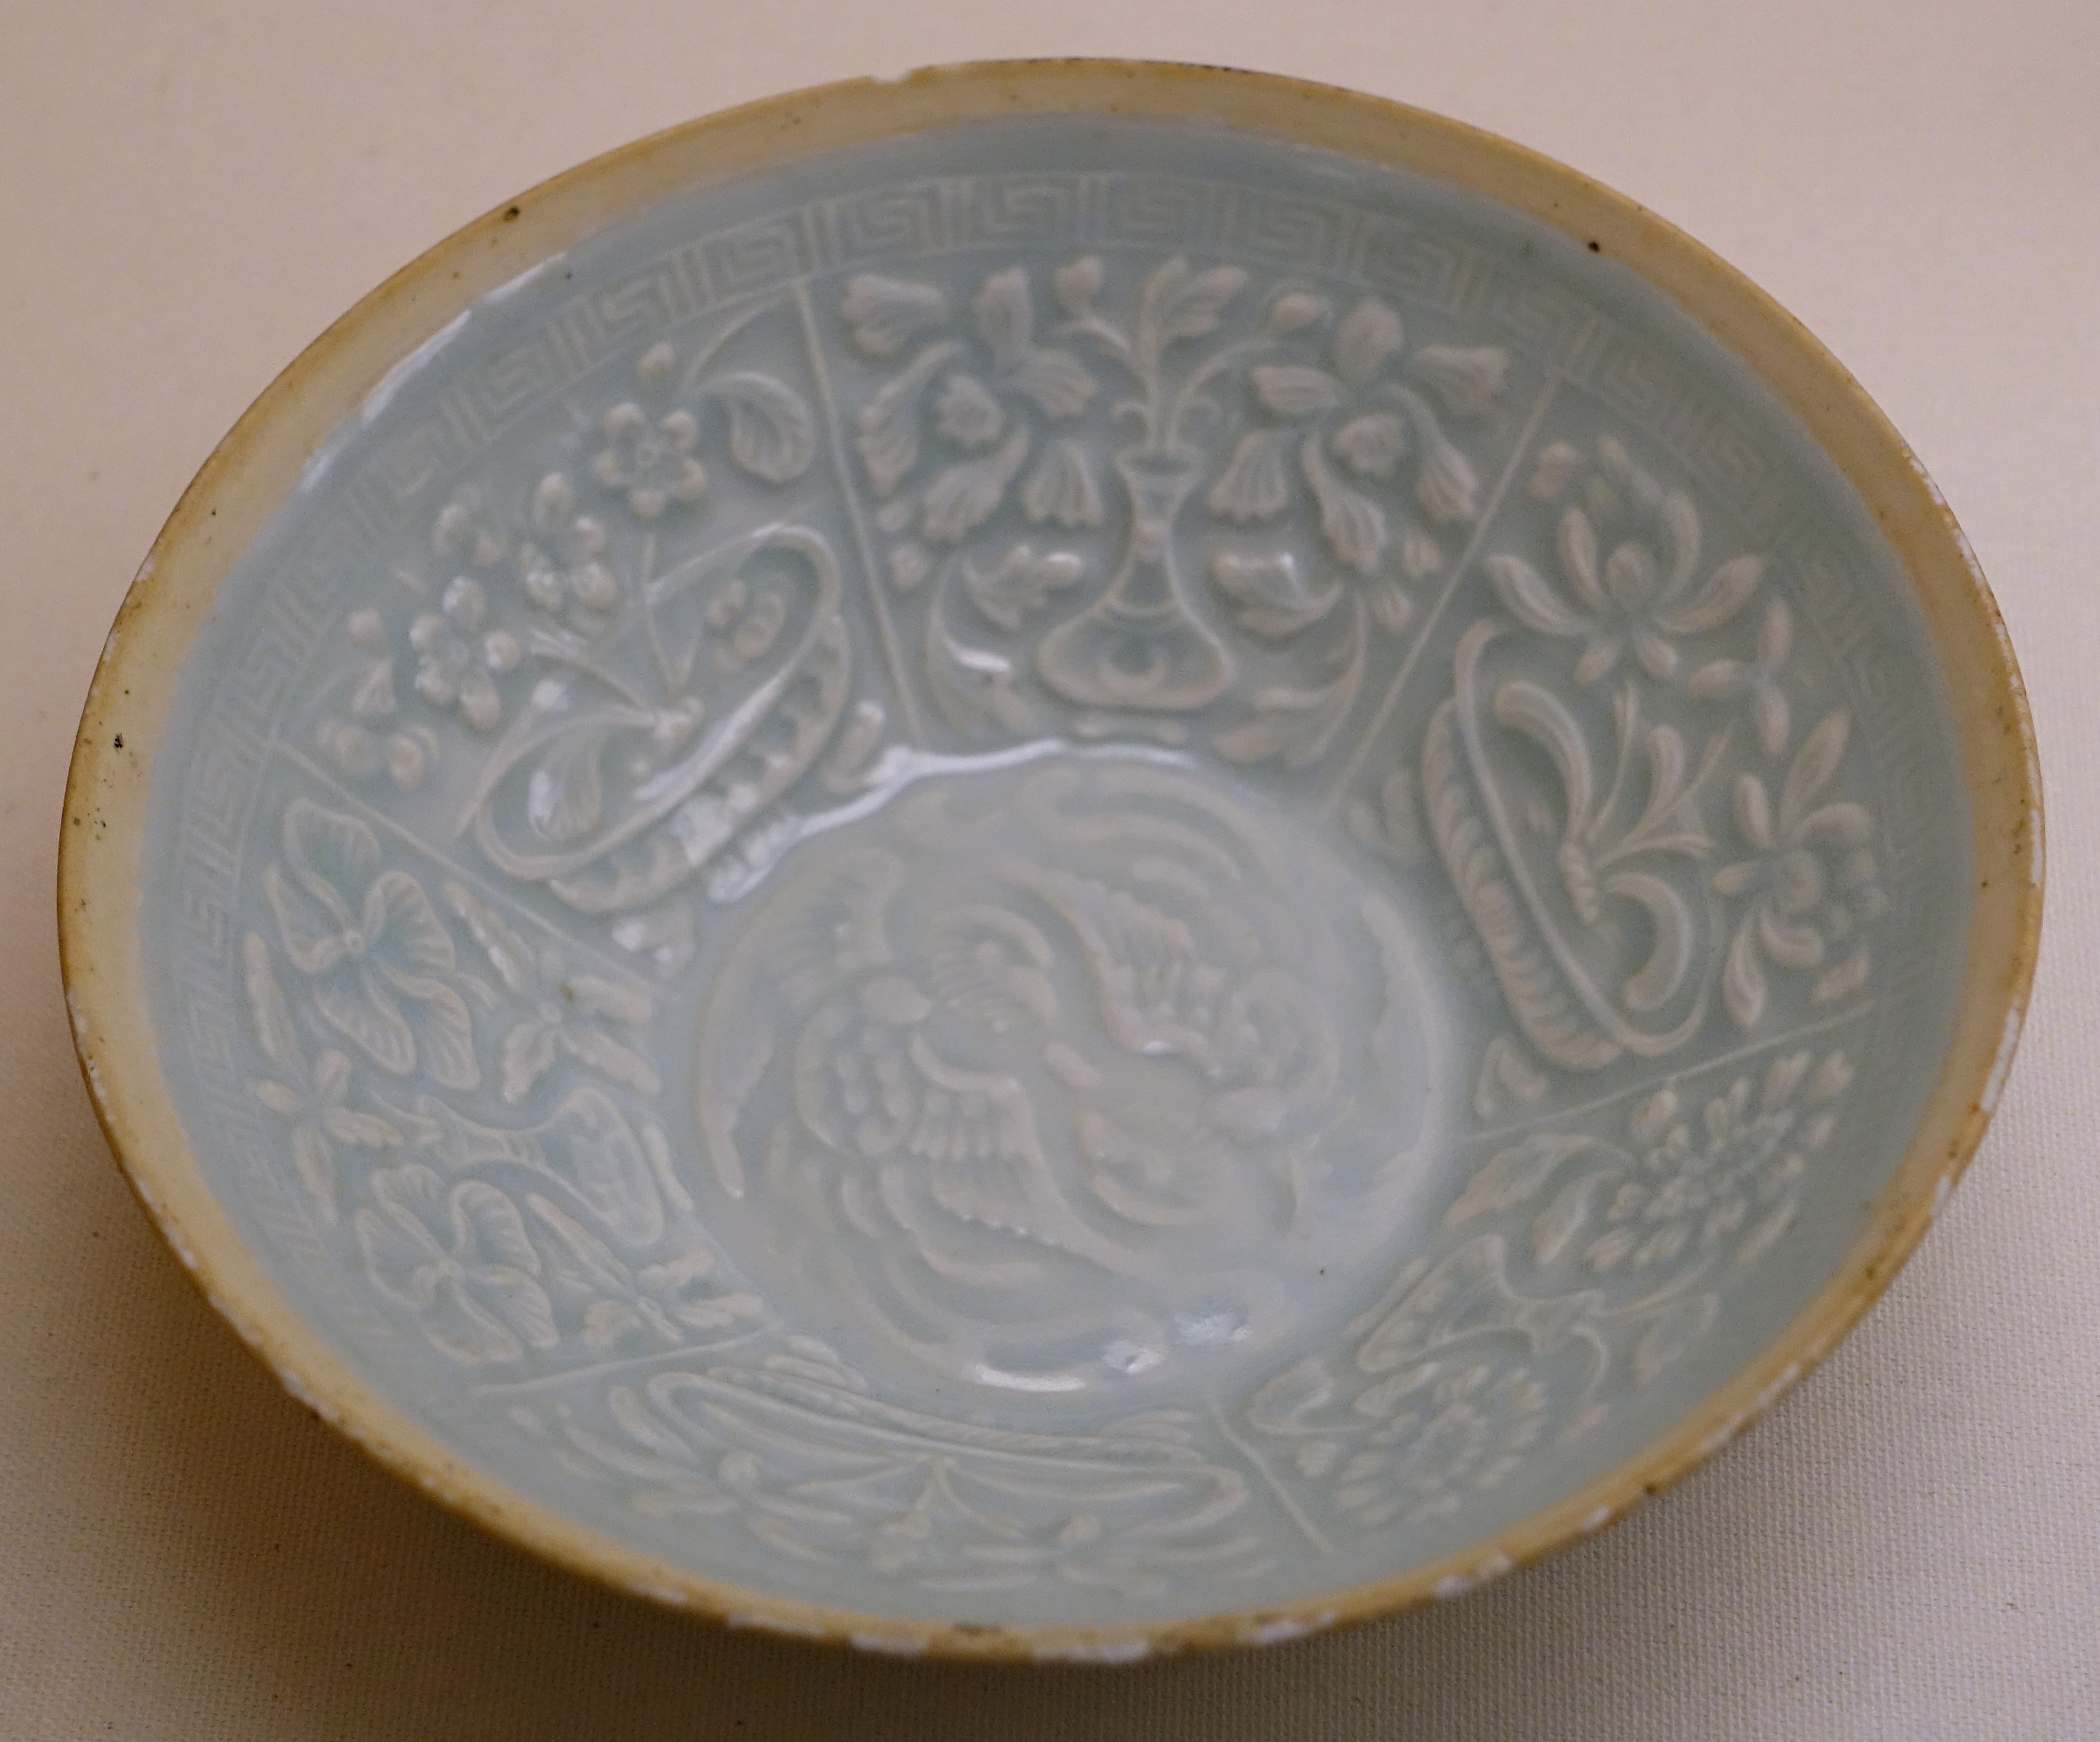 File:Bowl, China, Jingdezhen kilns, Jiangxi province, Southern Song dynasty, 13th century AD, qingbai-glazed stoneware - Ethnological Museum, Berlin - DSC01992.jpg